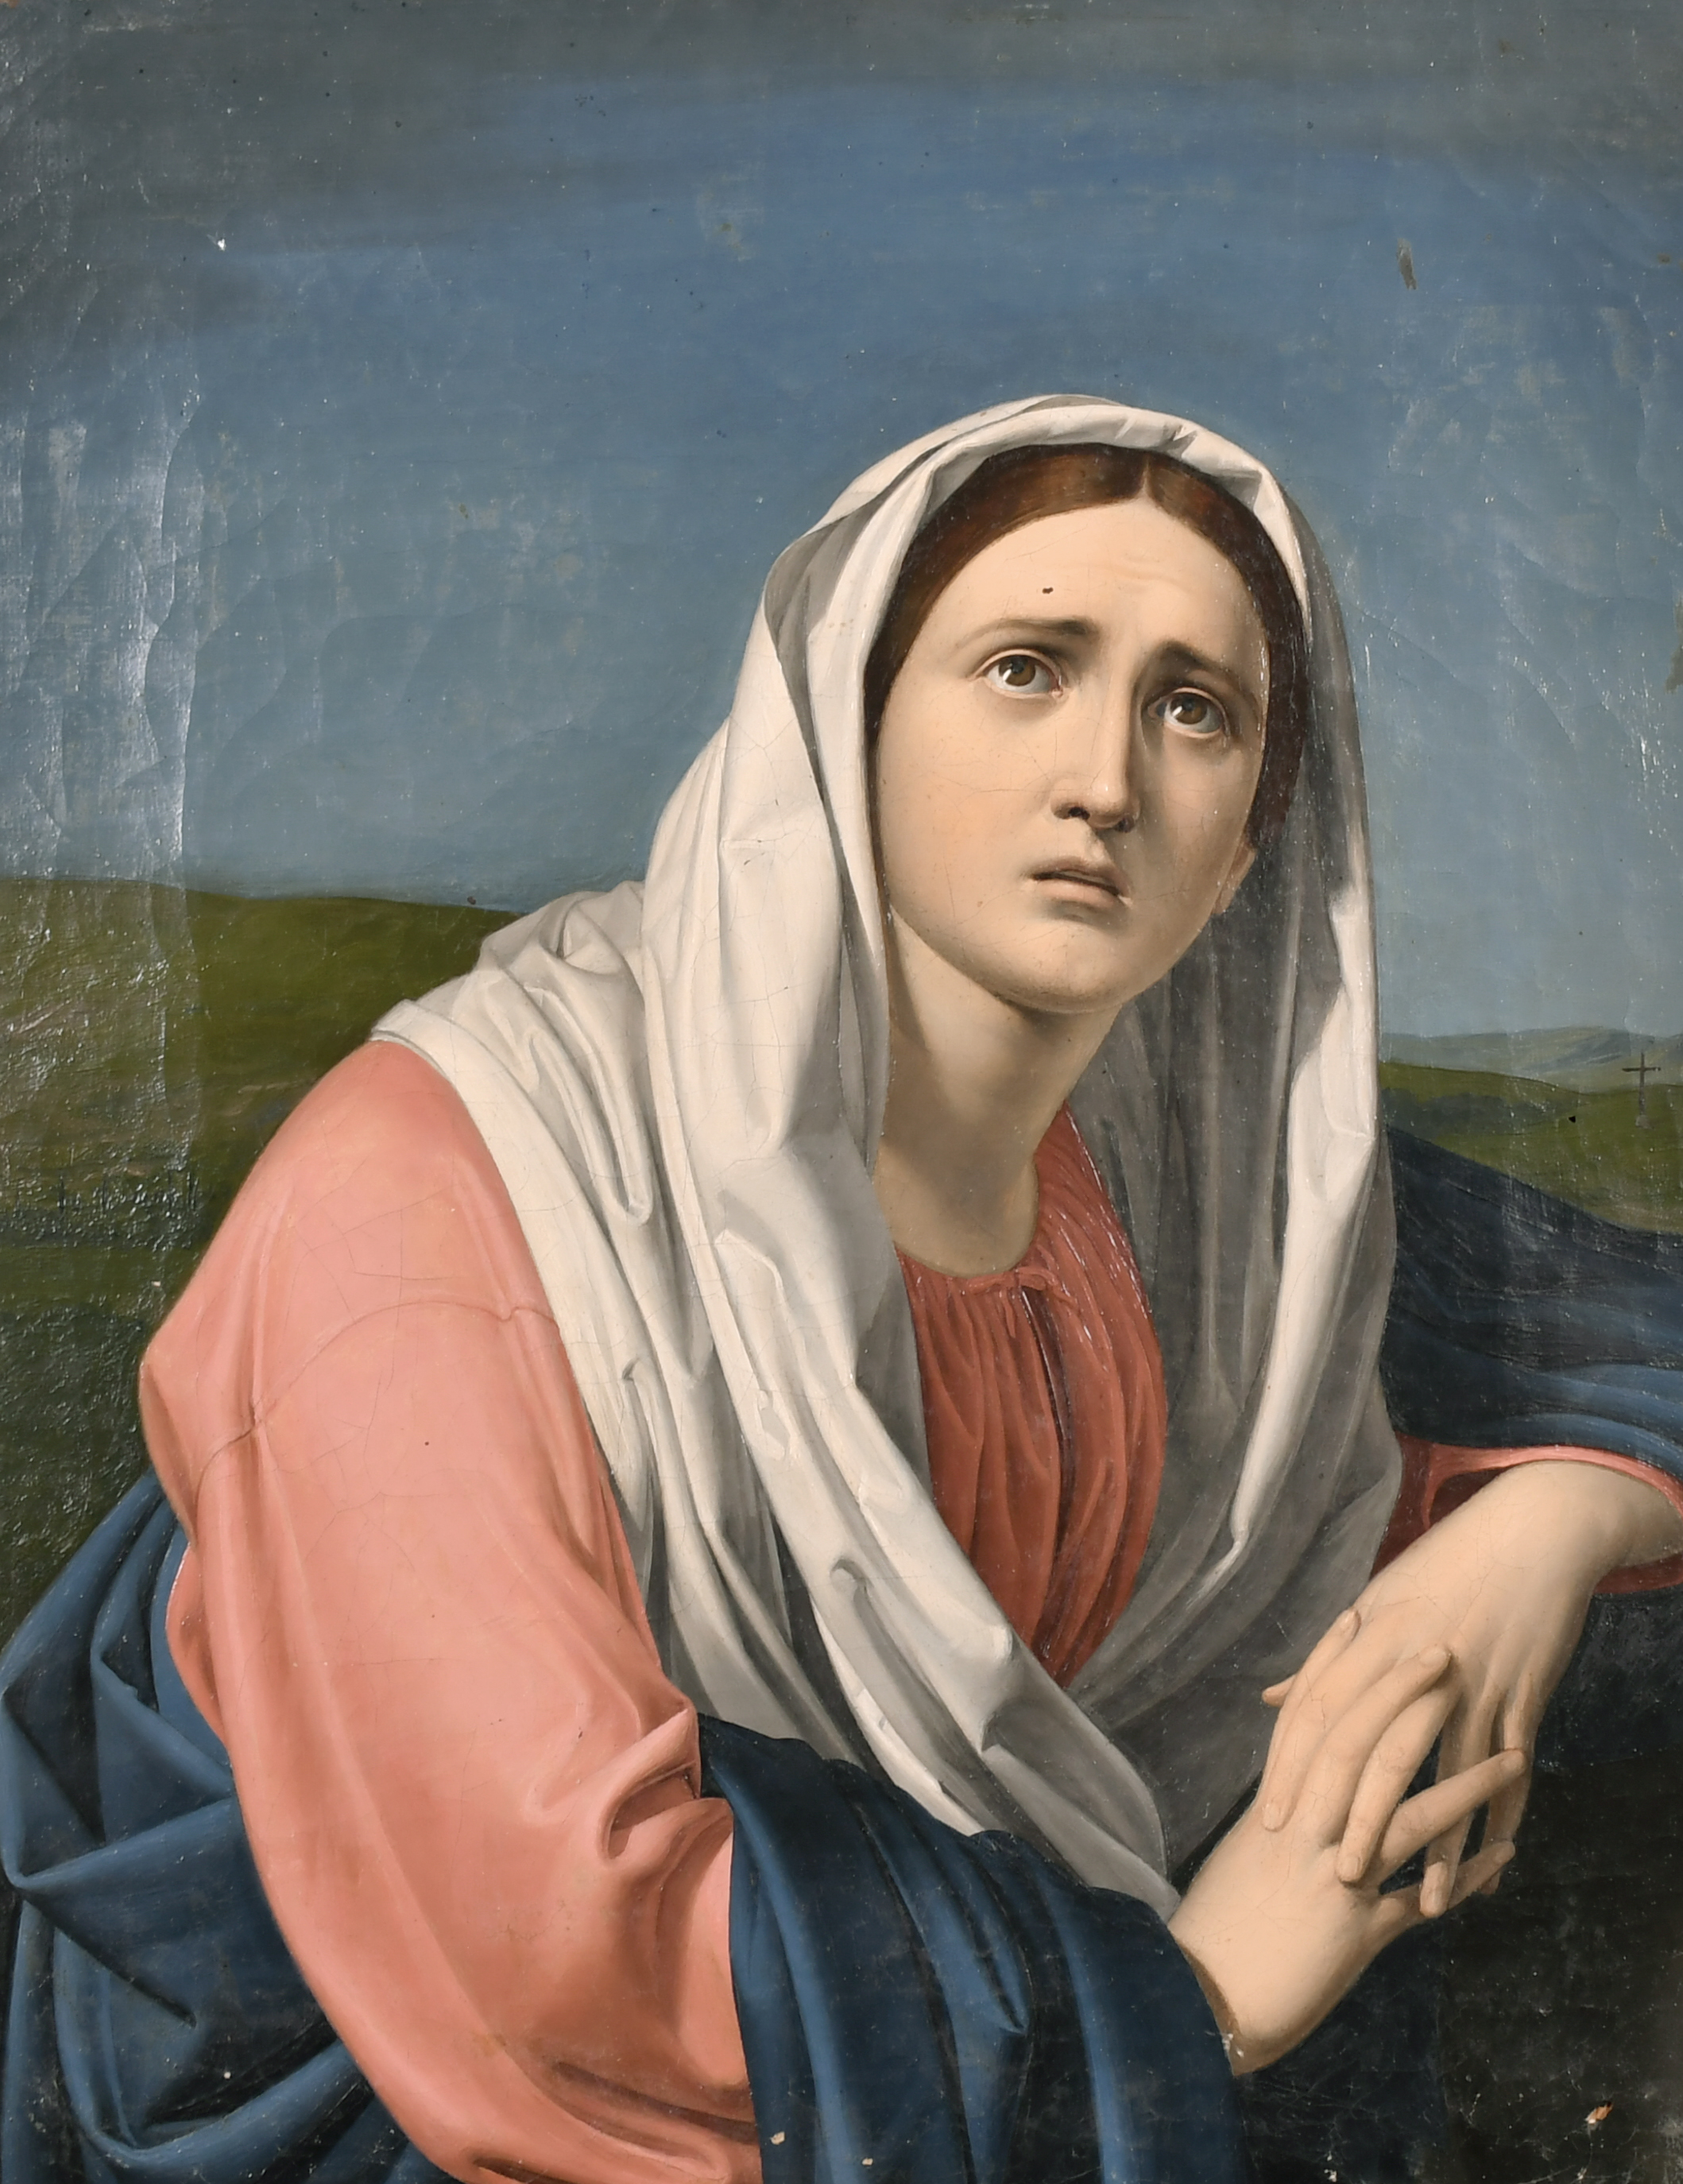 19th Century Italian School. Study of a Madonna, Oil on Canvas, 14.5" x 12" (36.8 x 30.5cm)